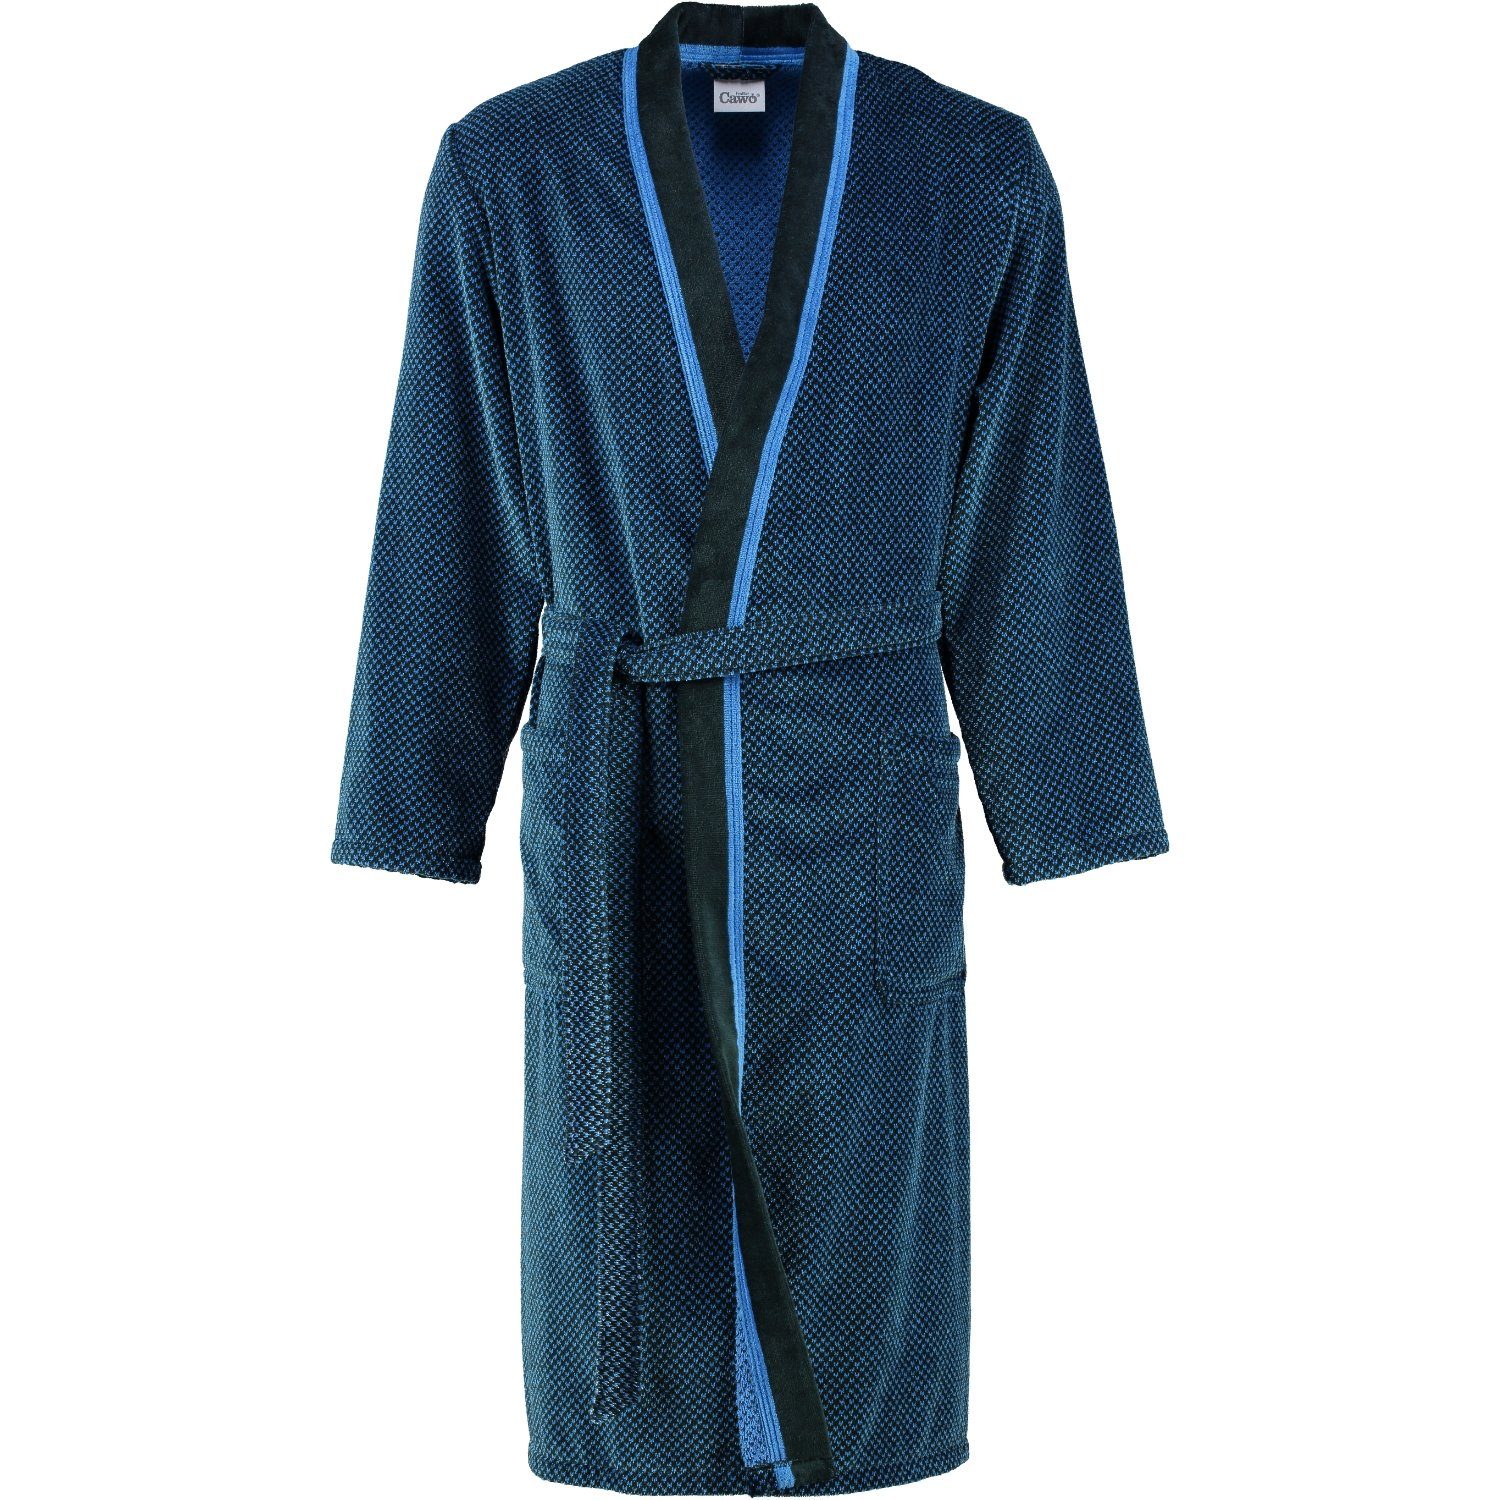 19 Herrenbademantel schwarz Cawö 4839, blau Form Baumwolle, Kimono Gürtel, Langform, Kimonoform,